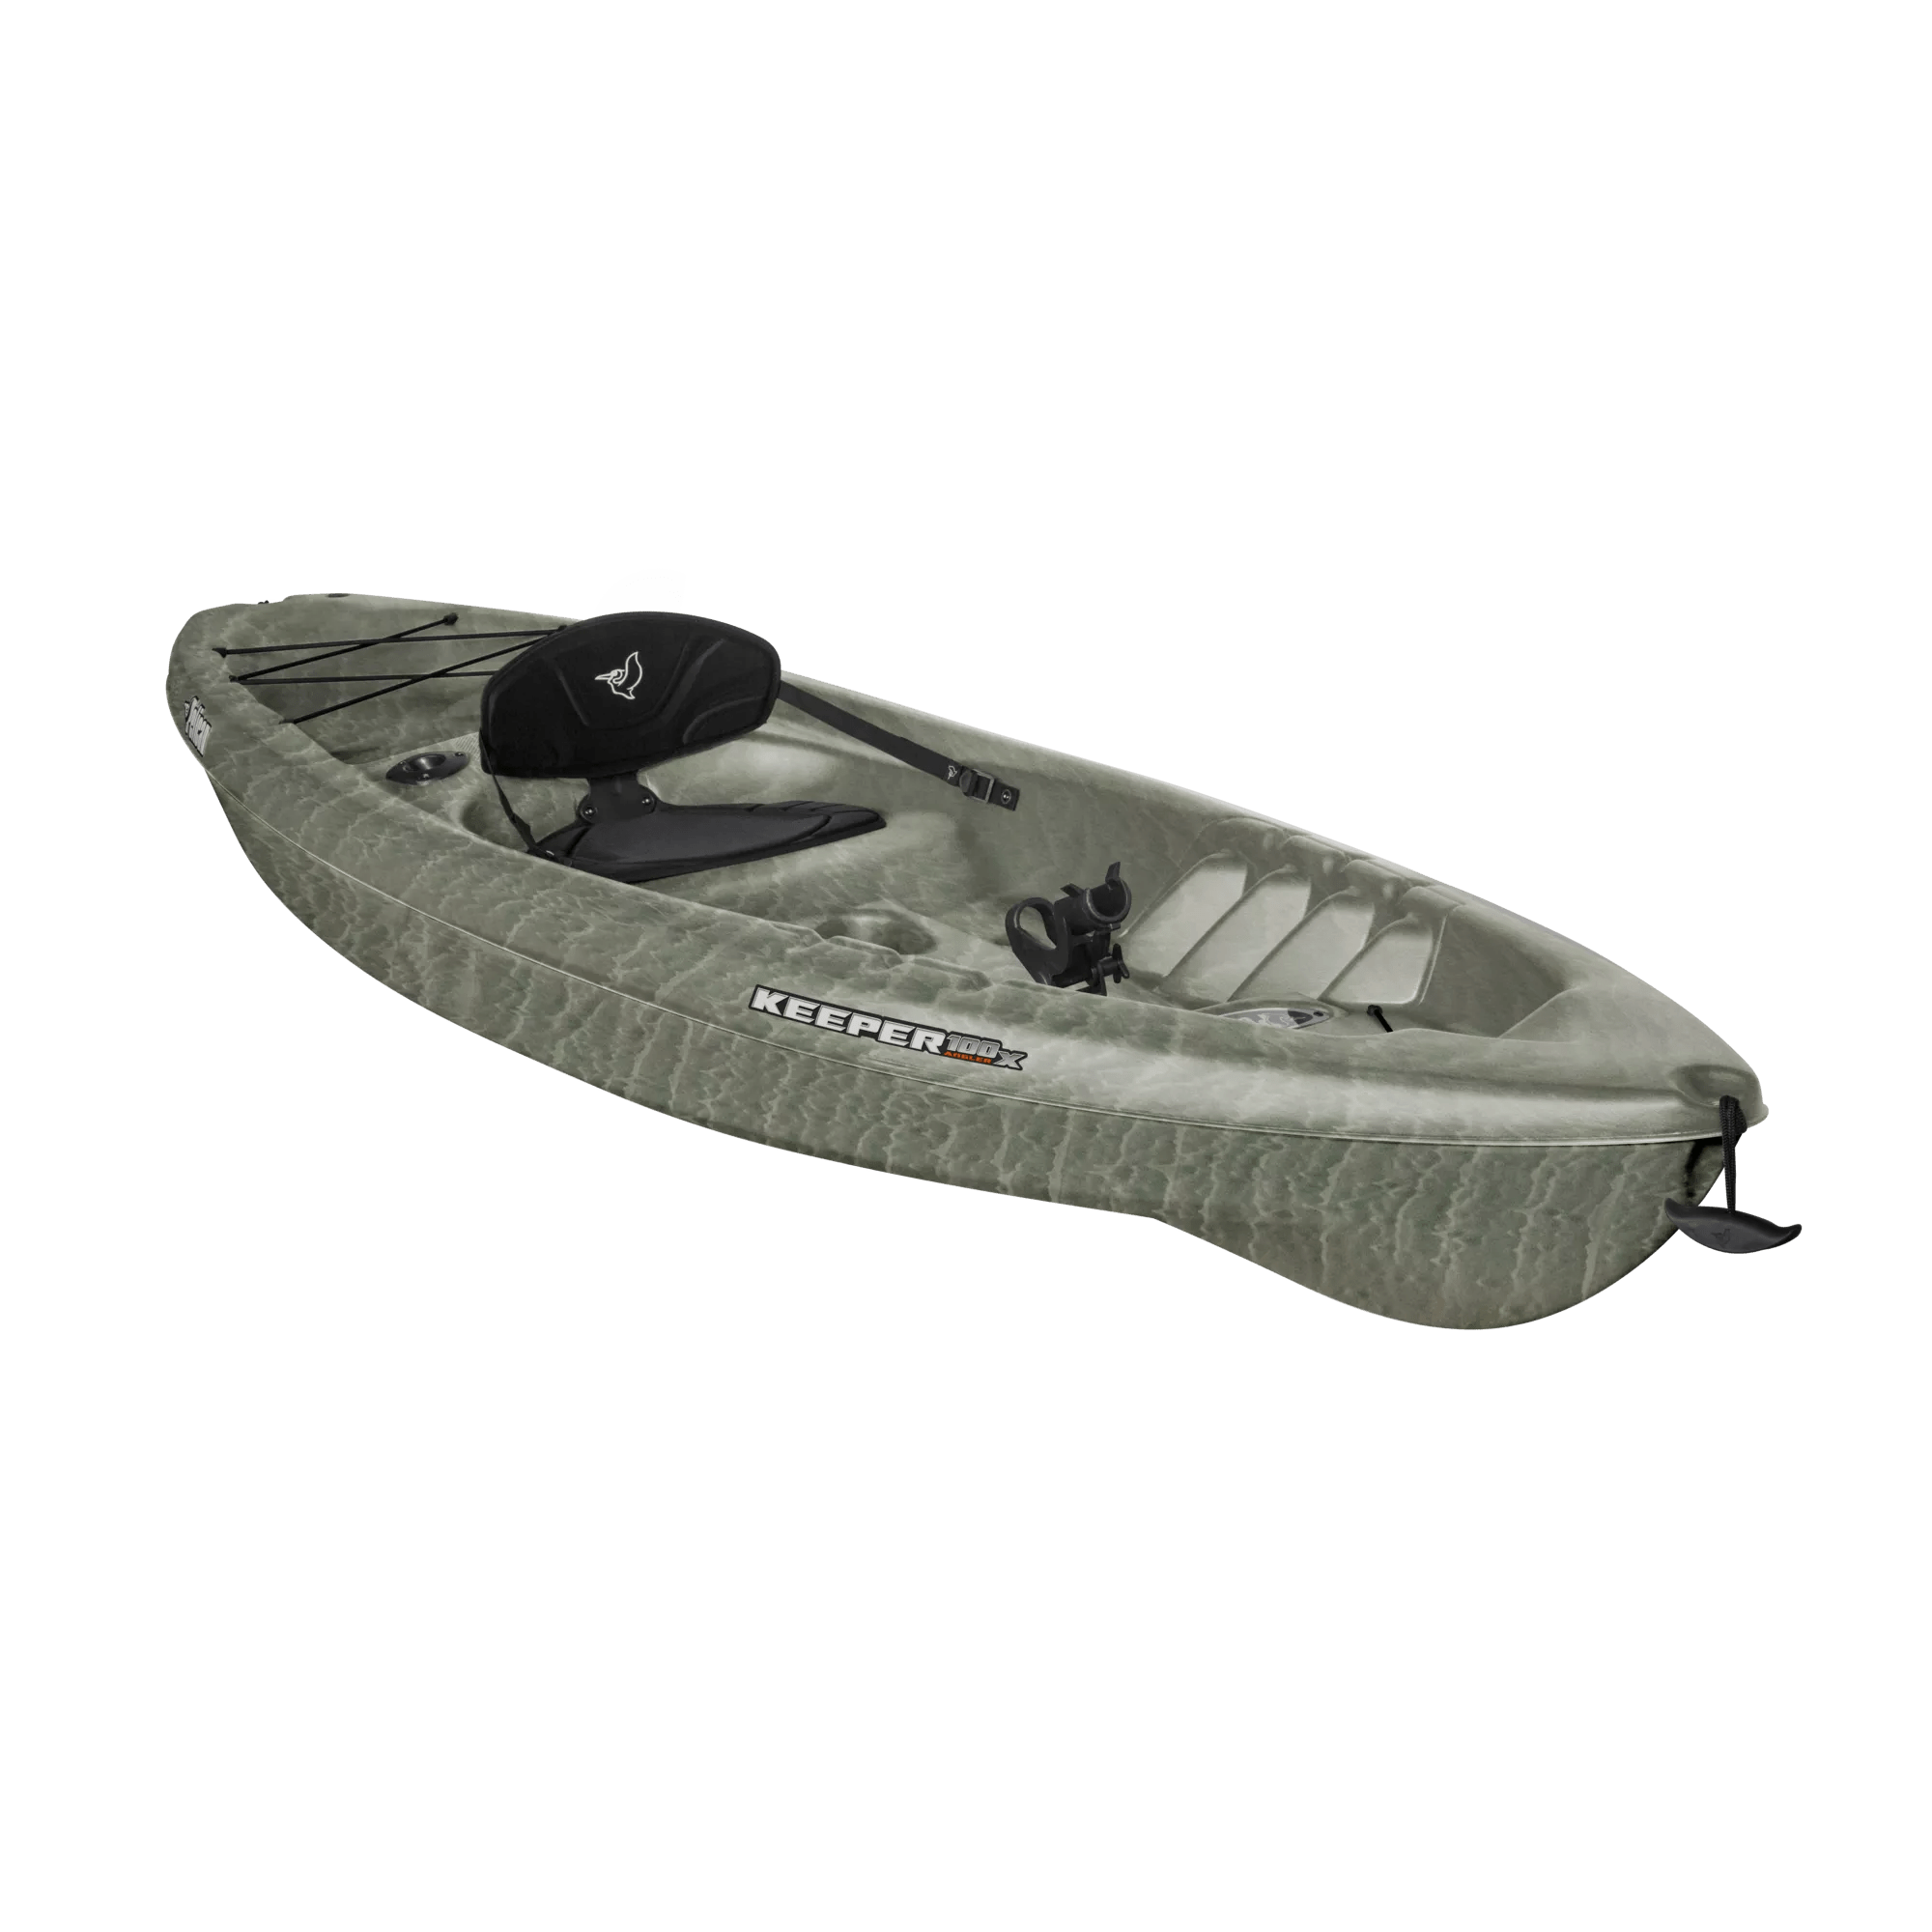 PELICAN - Keeper 100X Angler Fishing Kayak - Grey - KVF10P401 - ISO